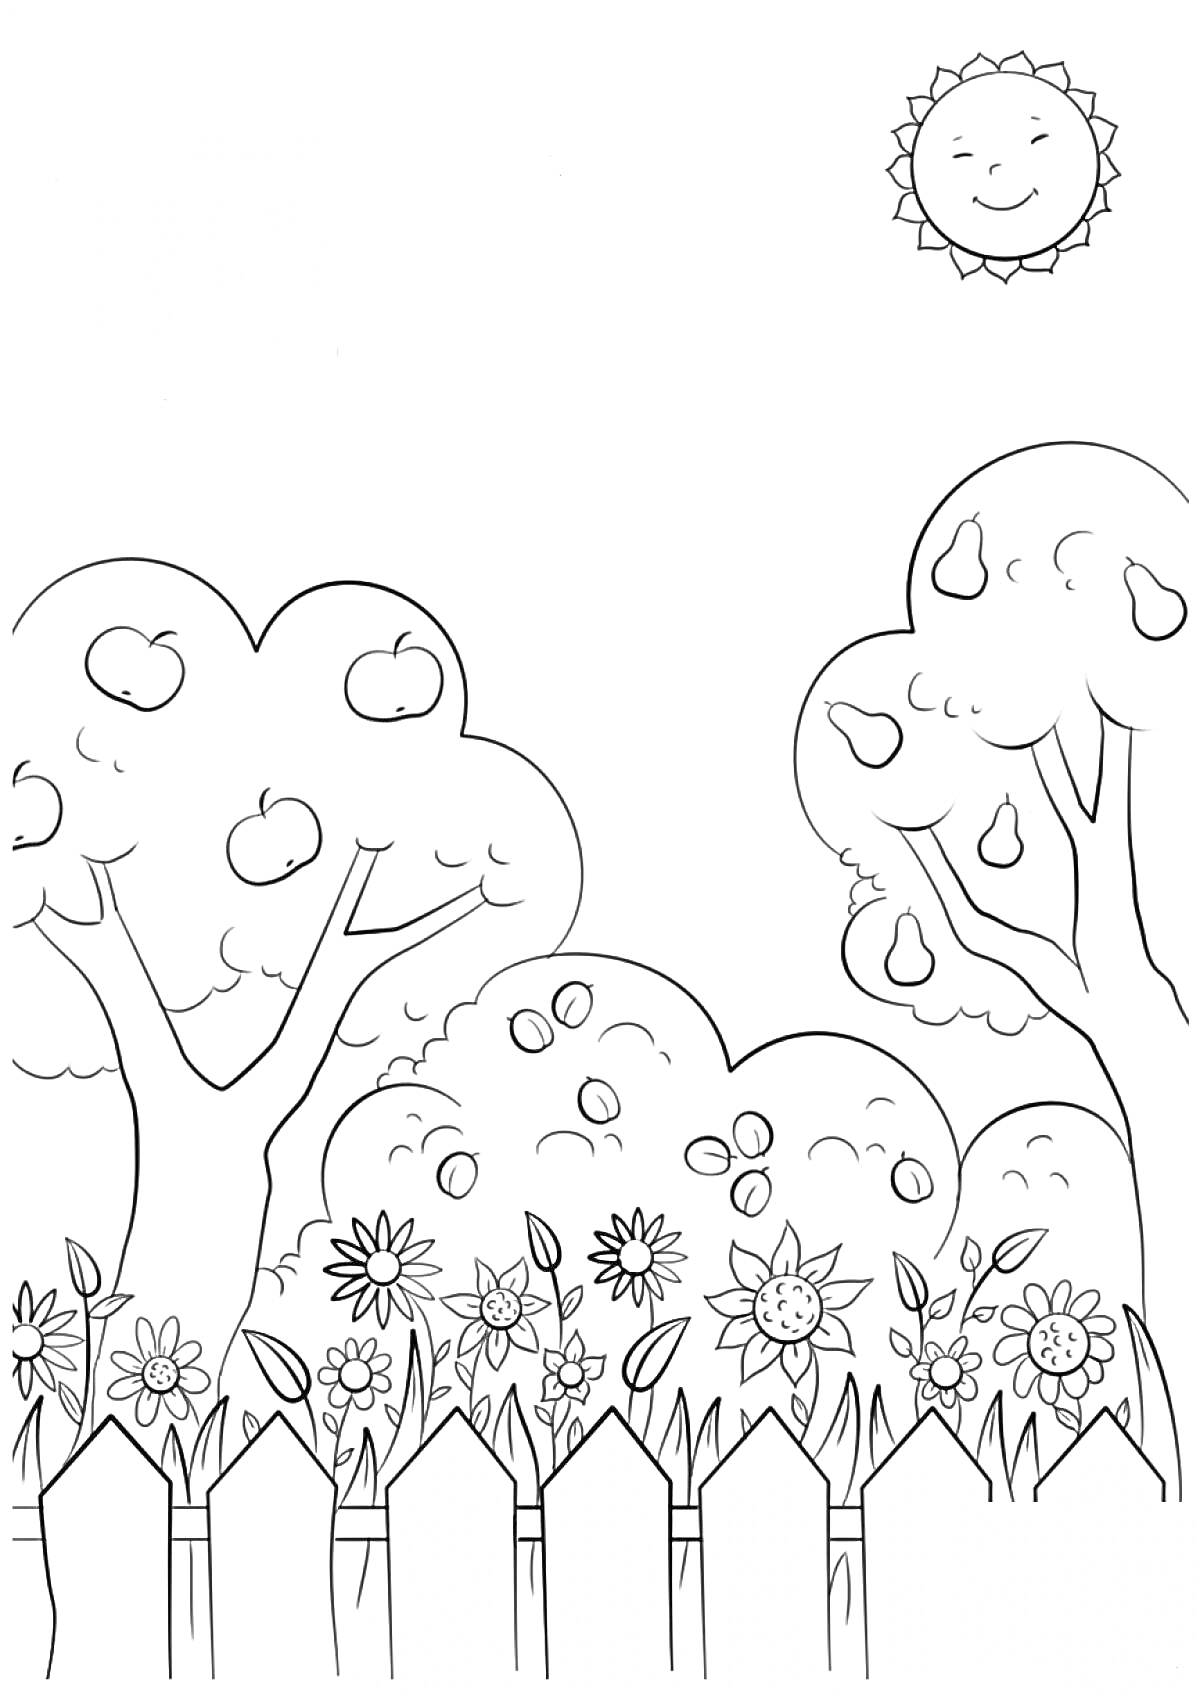 Раскраска Сад с яблонями, грушами, забором и цветами